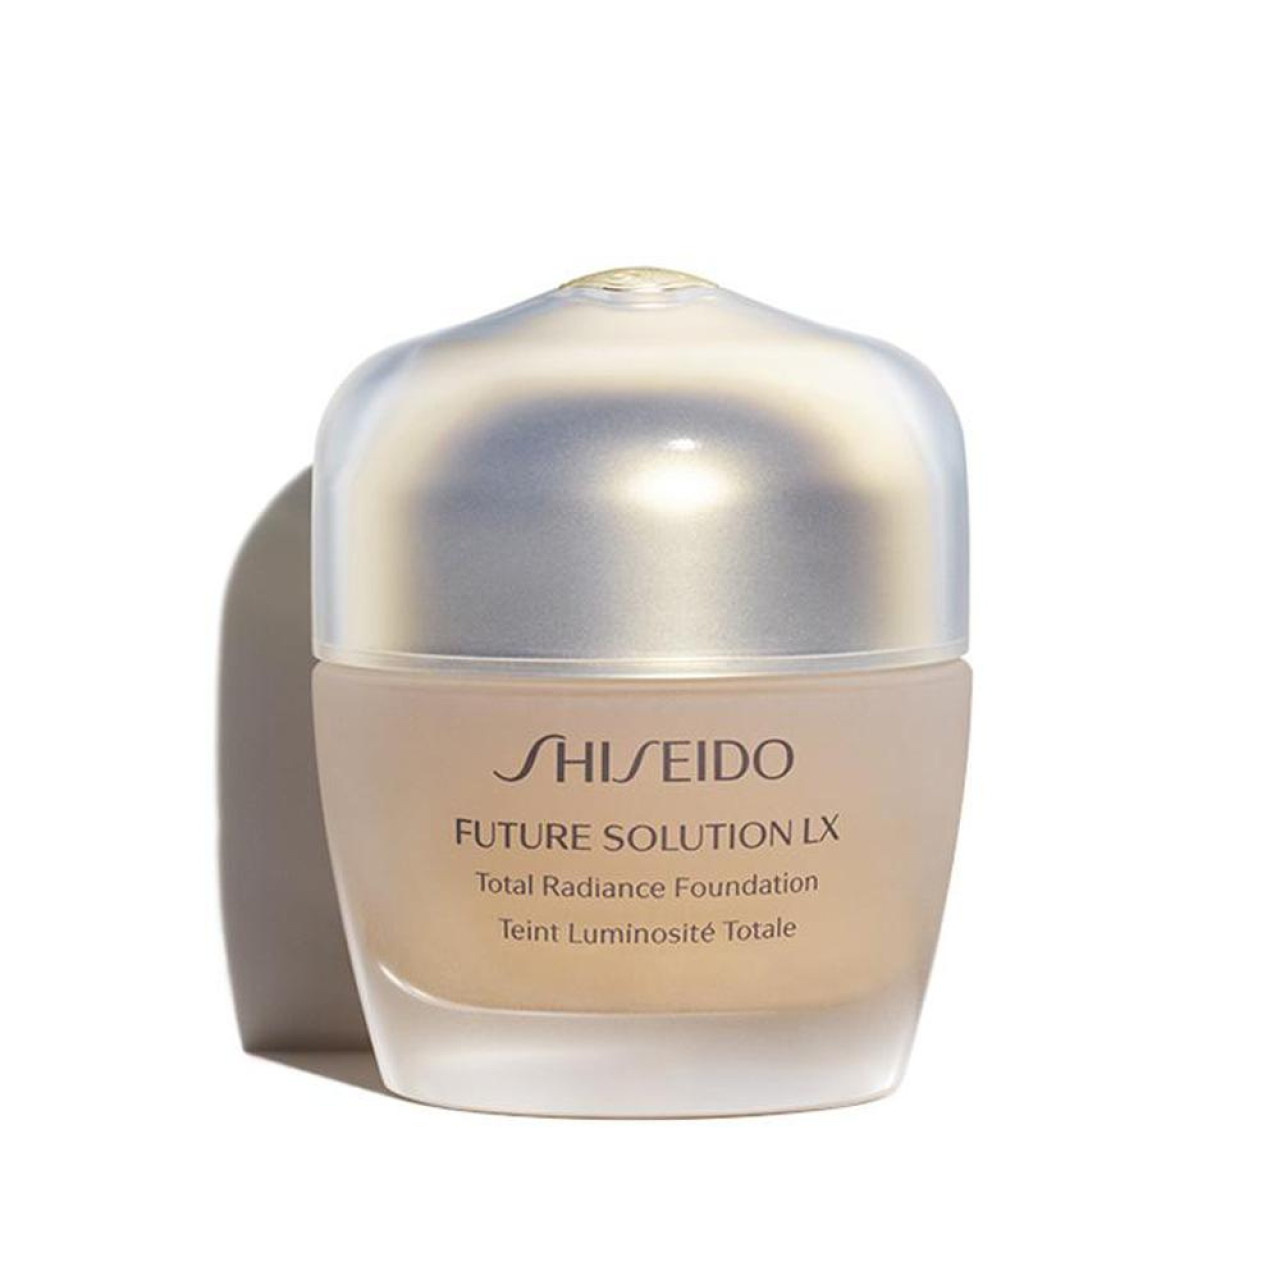 Shiseido future solution lx g3 30ml